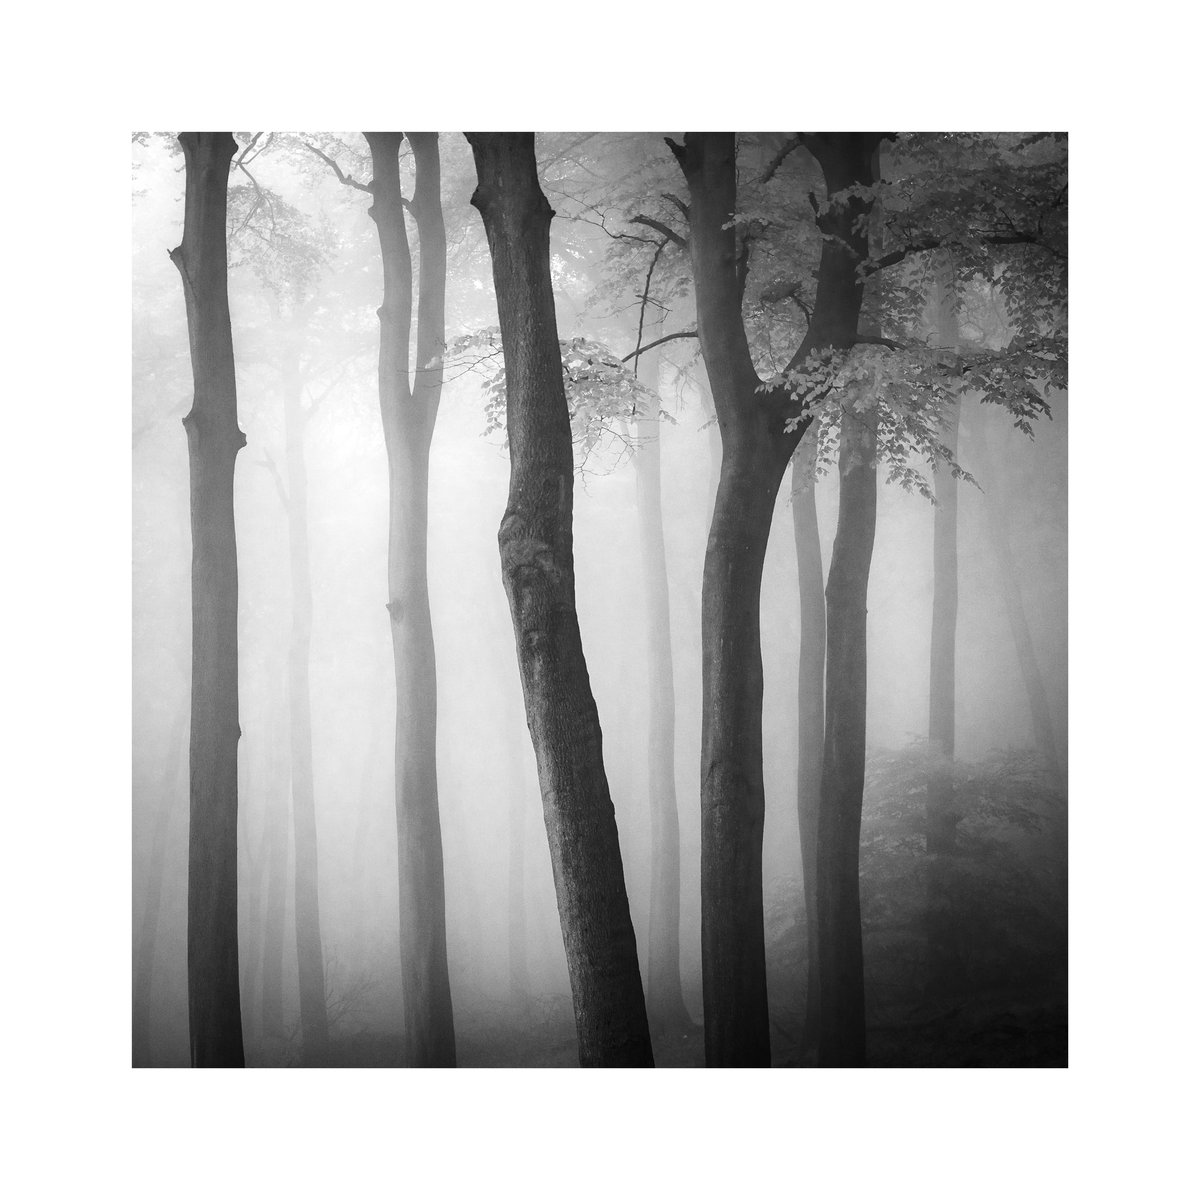 Stillness, Buckinghamshire
#photography #monochrome #bnw #woodland